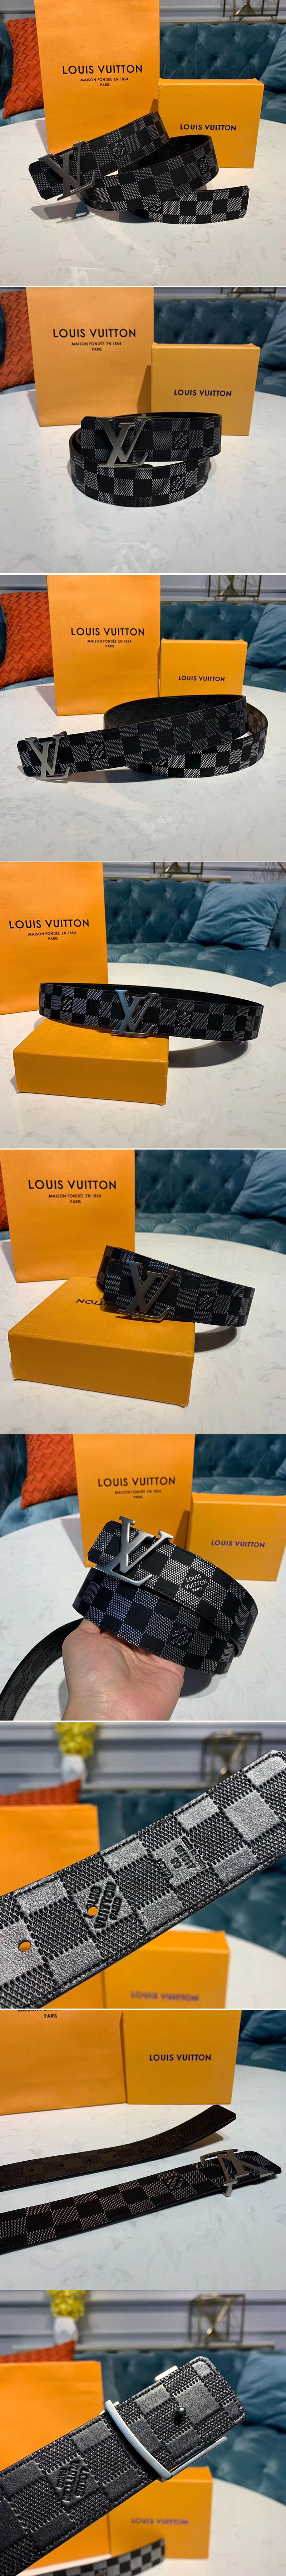 Replica Louis Vuitton Belts